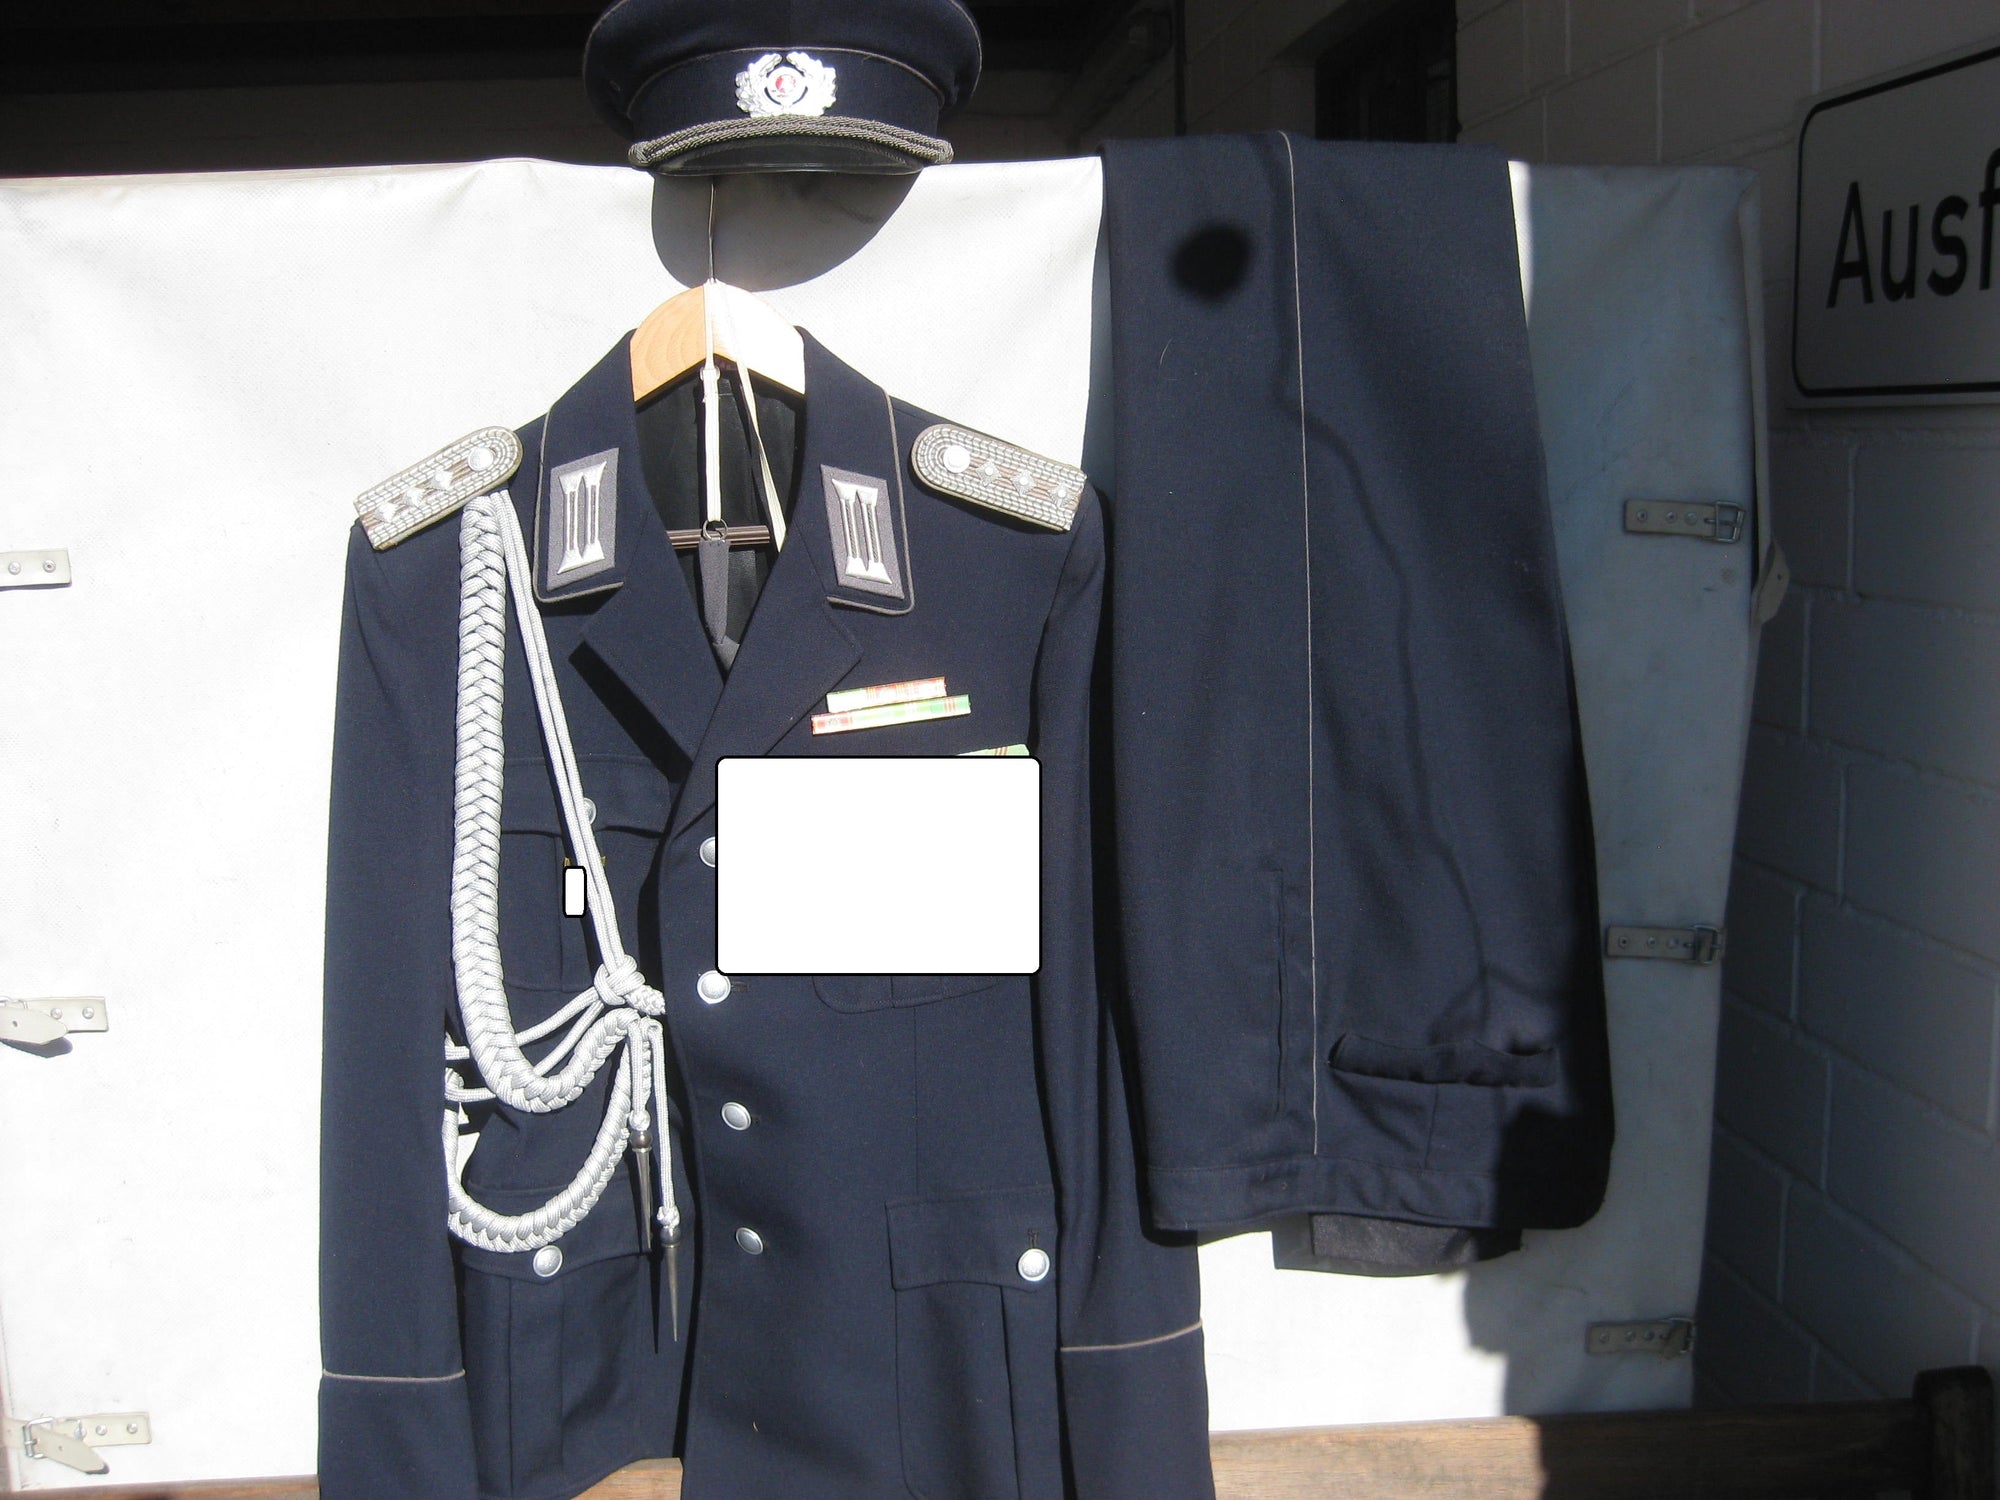 DDR Uniform Ministerium des Inneren Stasi Stafvollzug NVA